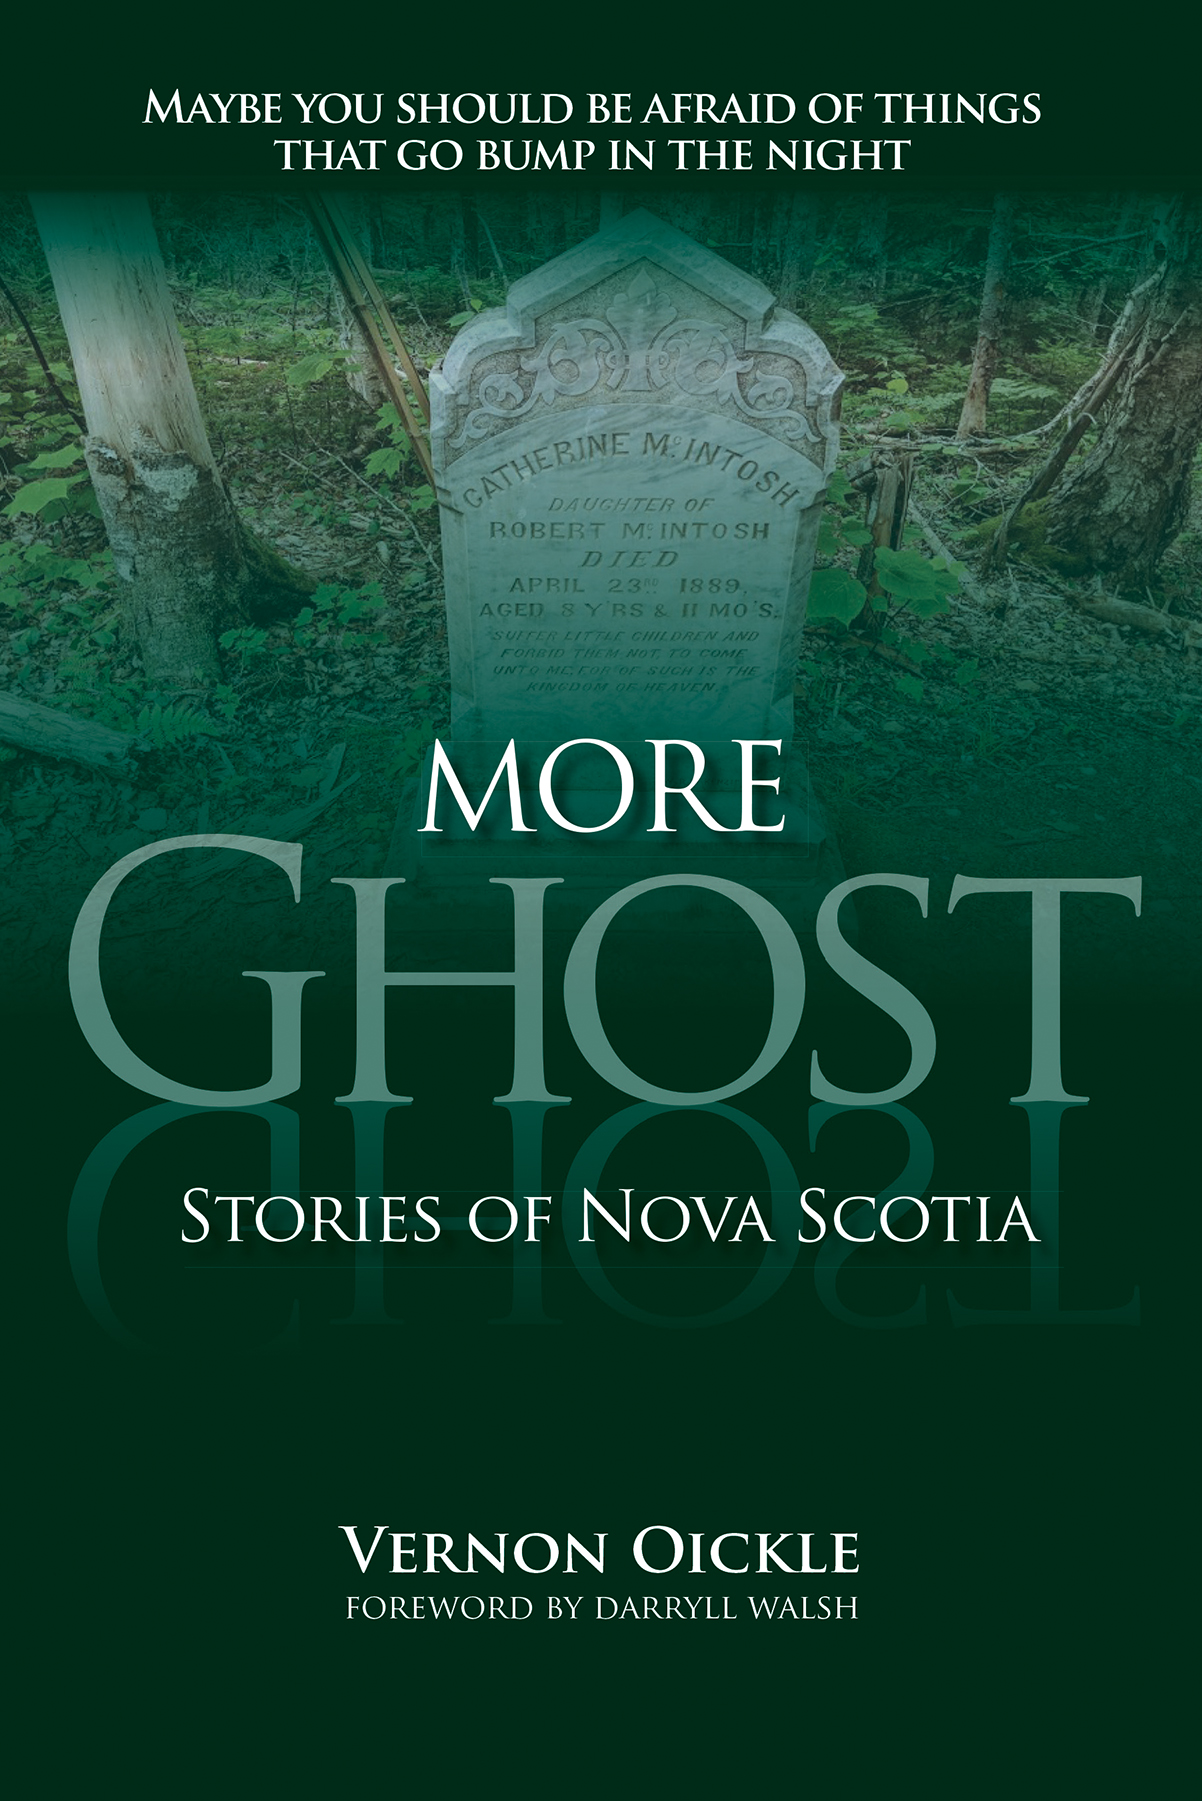 More Ghost Stories of Nova Scotia